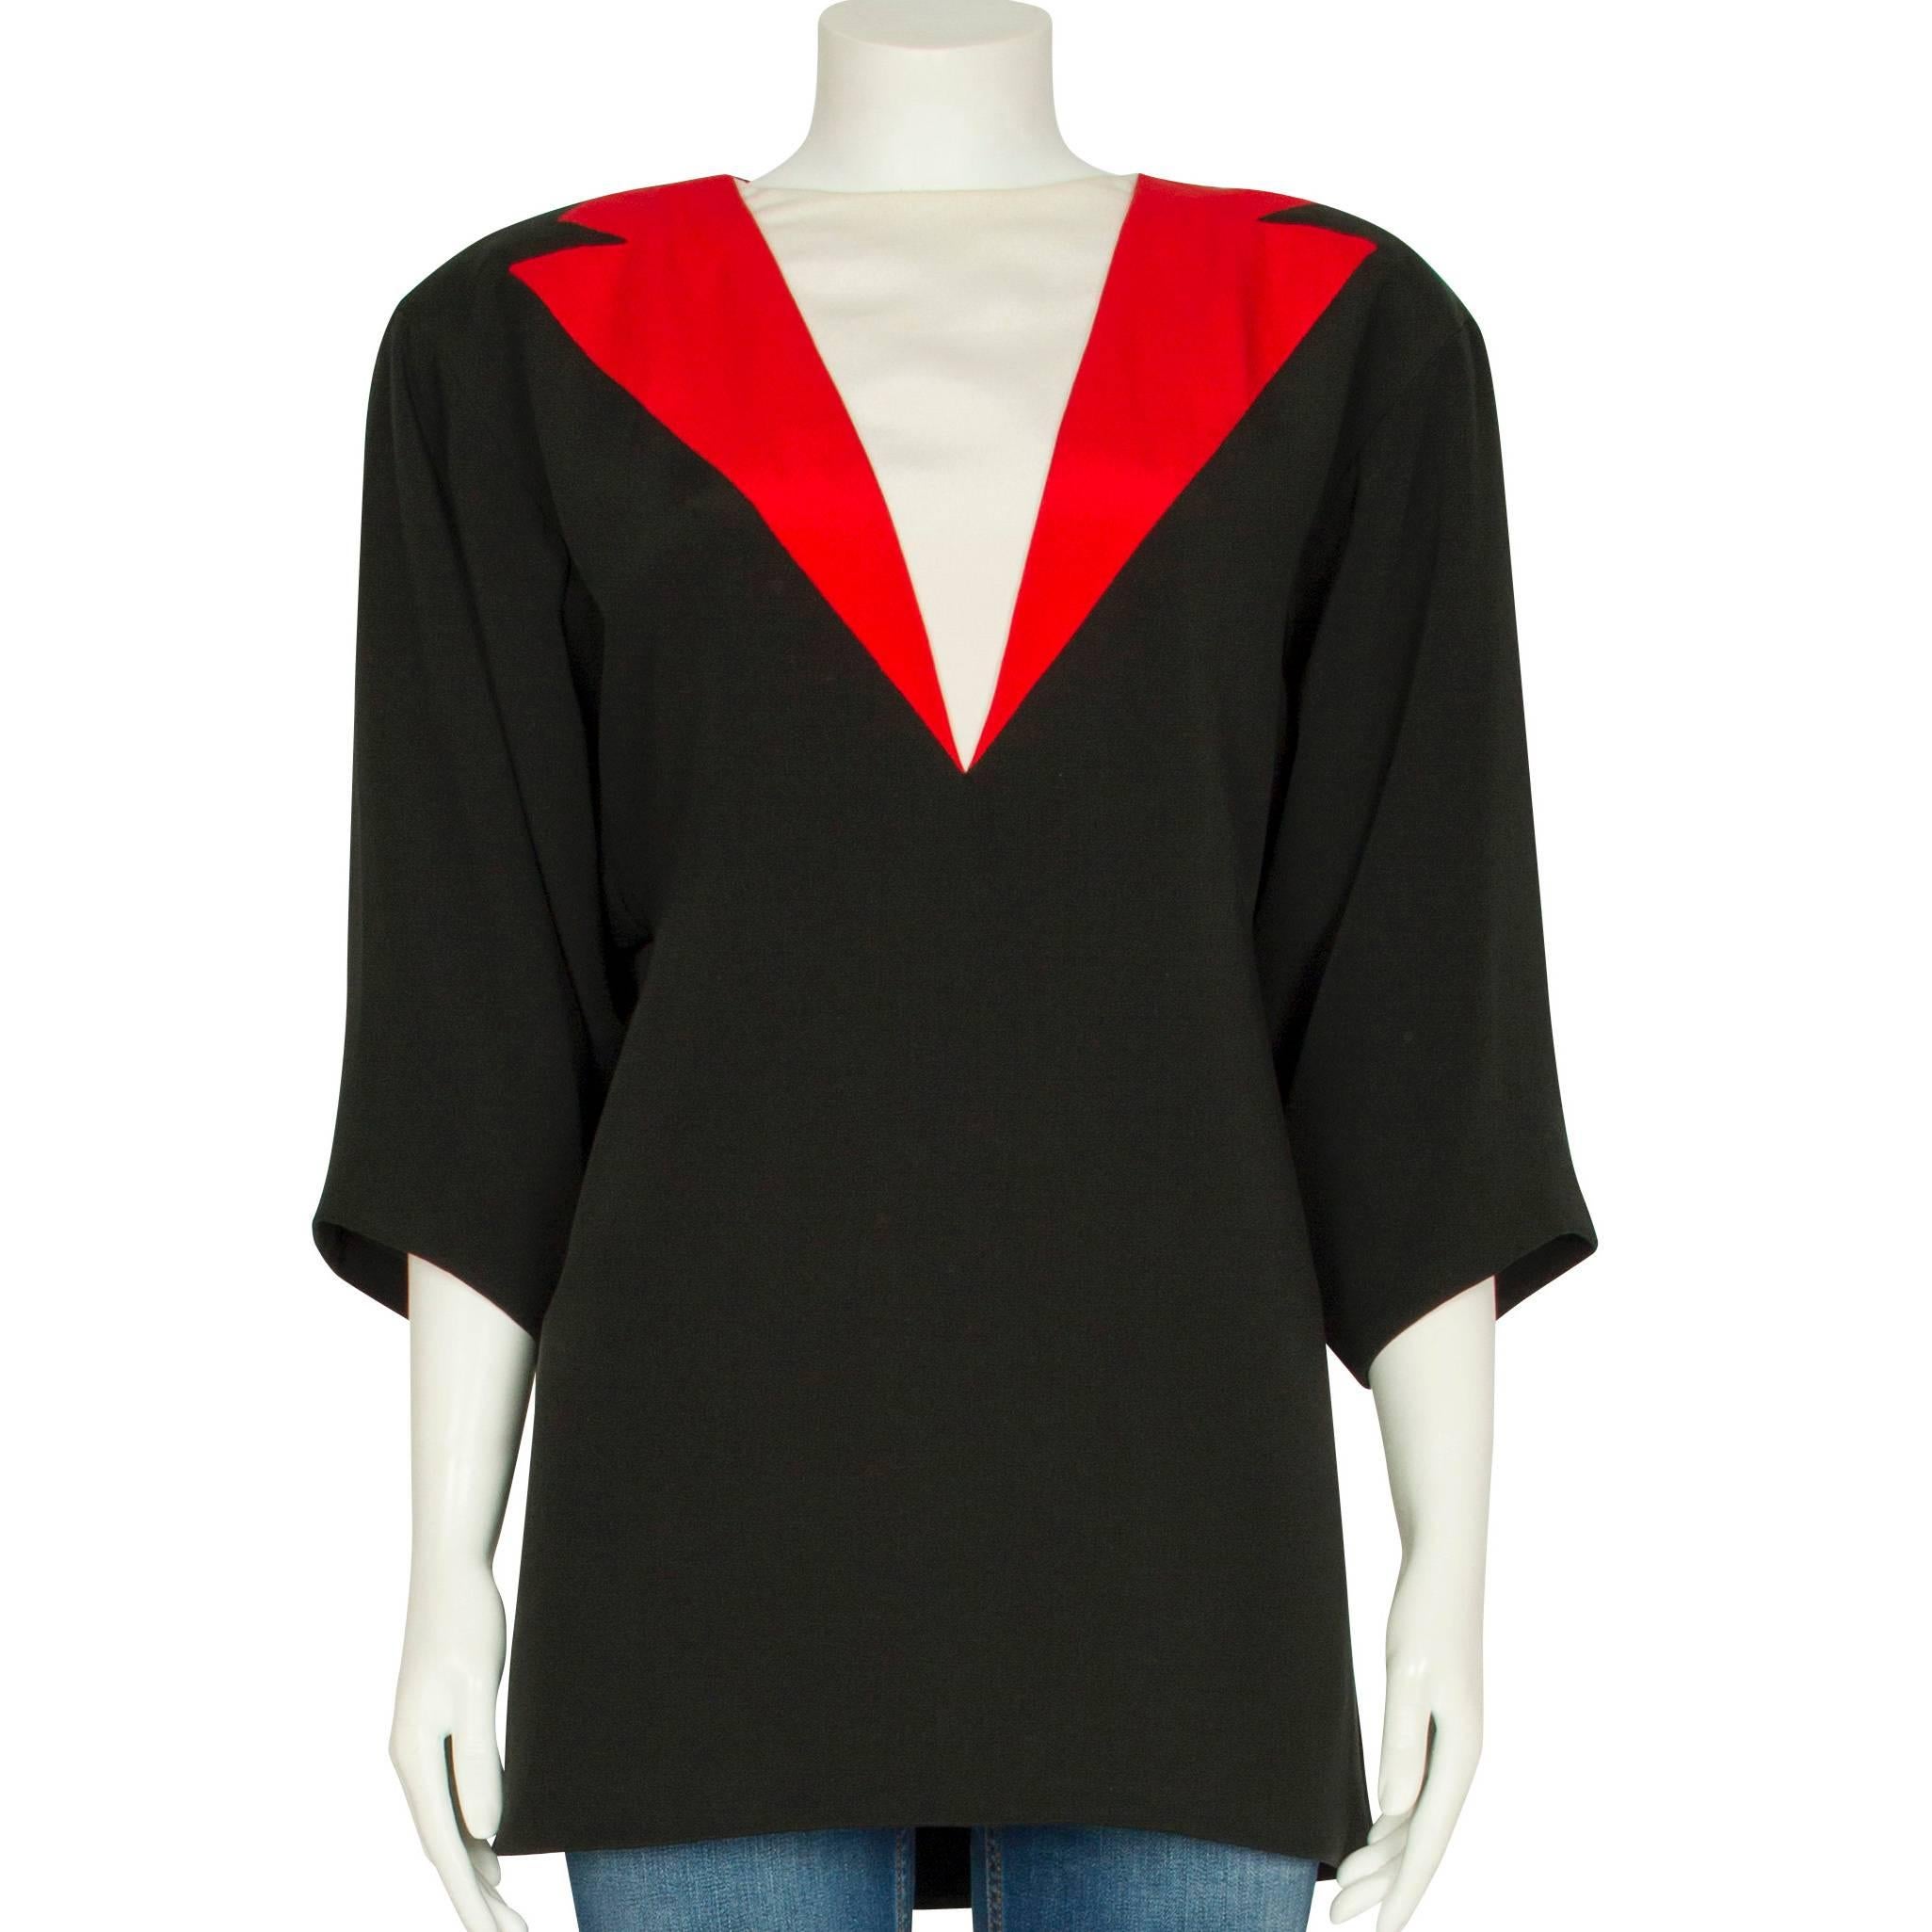 S/S 1983 Dior Couture Black Red & Ivory Silk Trompe L'Oeil Boxy Tunic For Sale 2